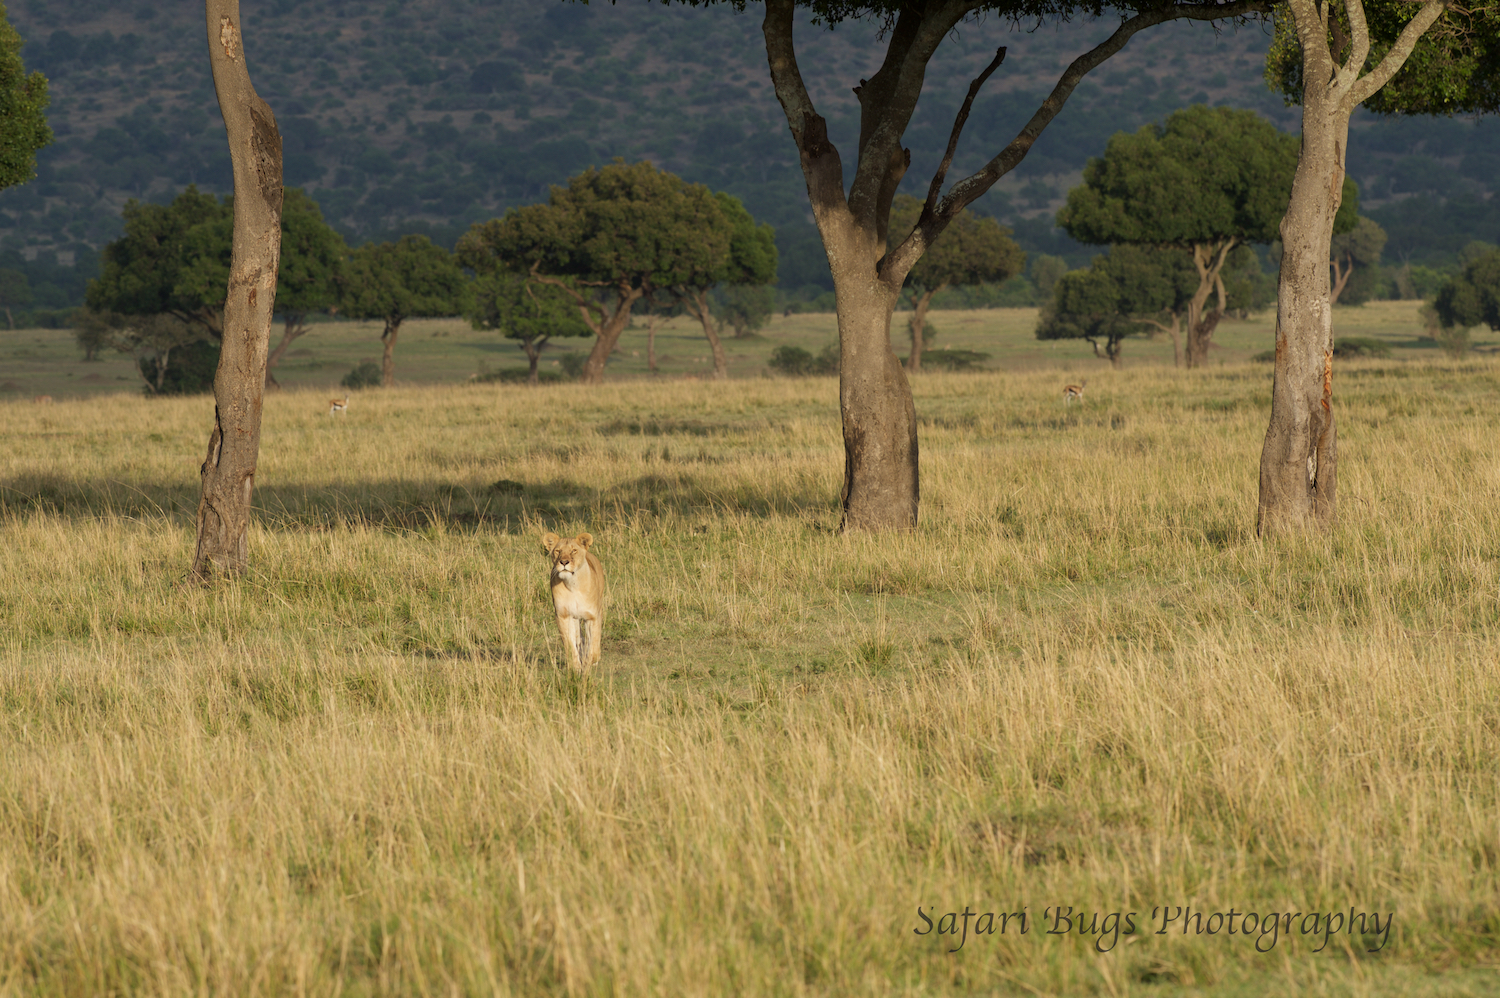 Lioness Safari Bugs (1).jpg